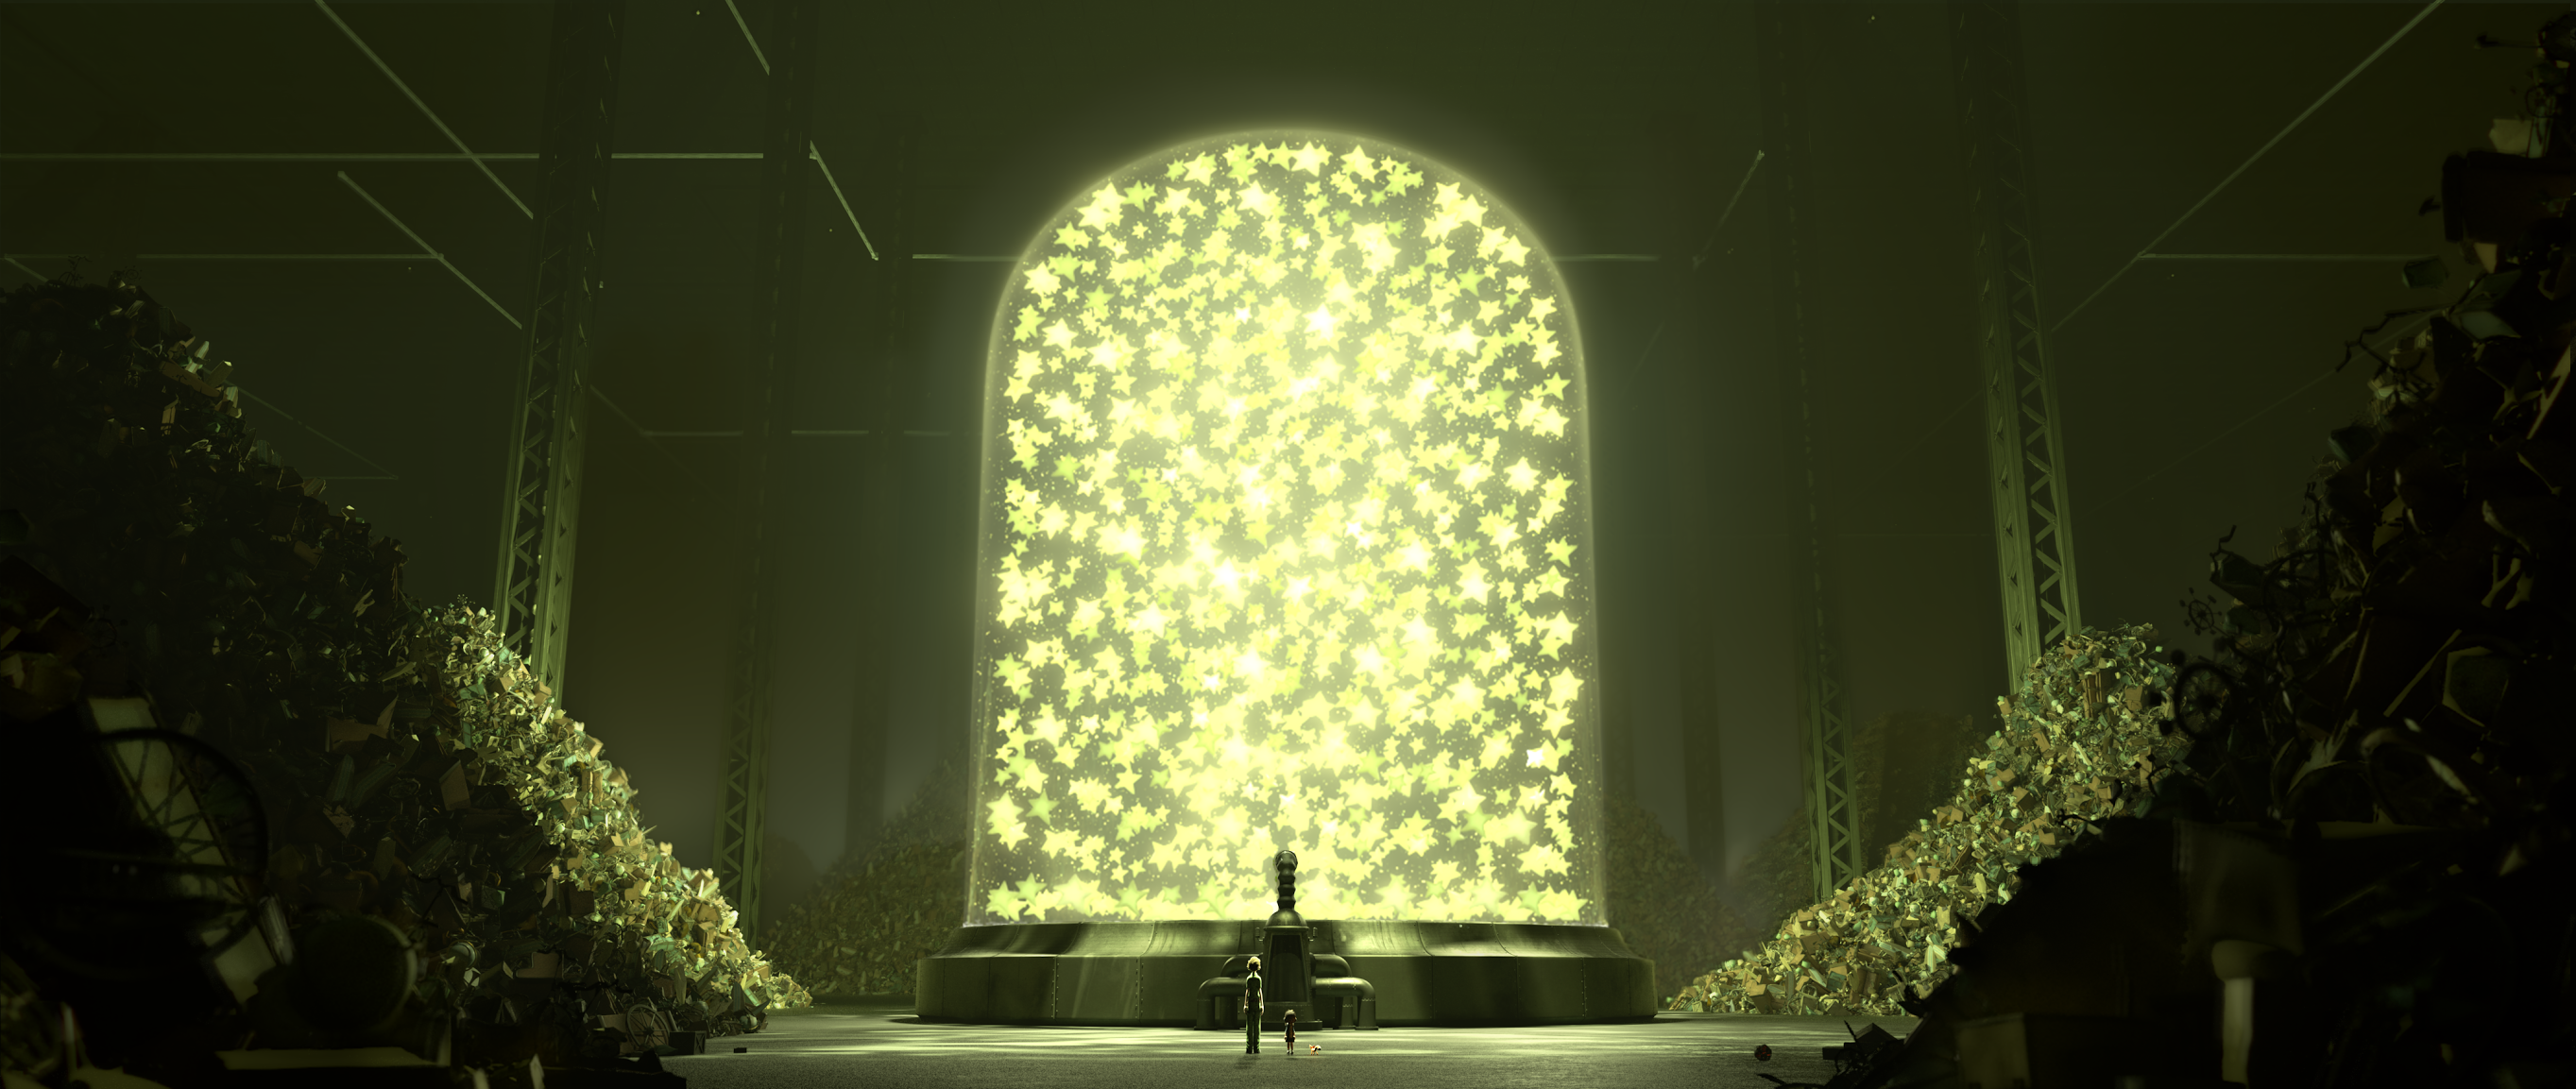 le petit prince wallpaper,lighting,light,green,architecture,light fixture